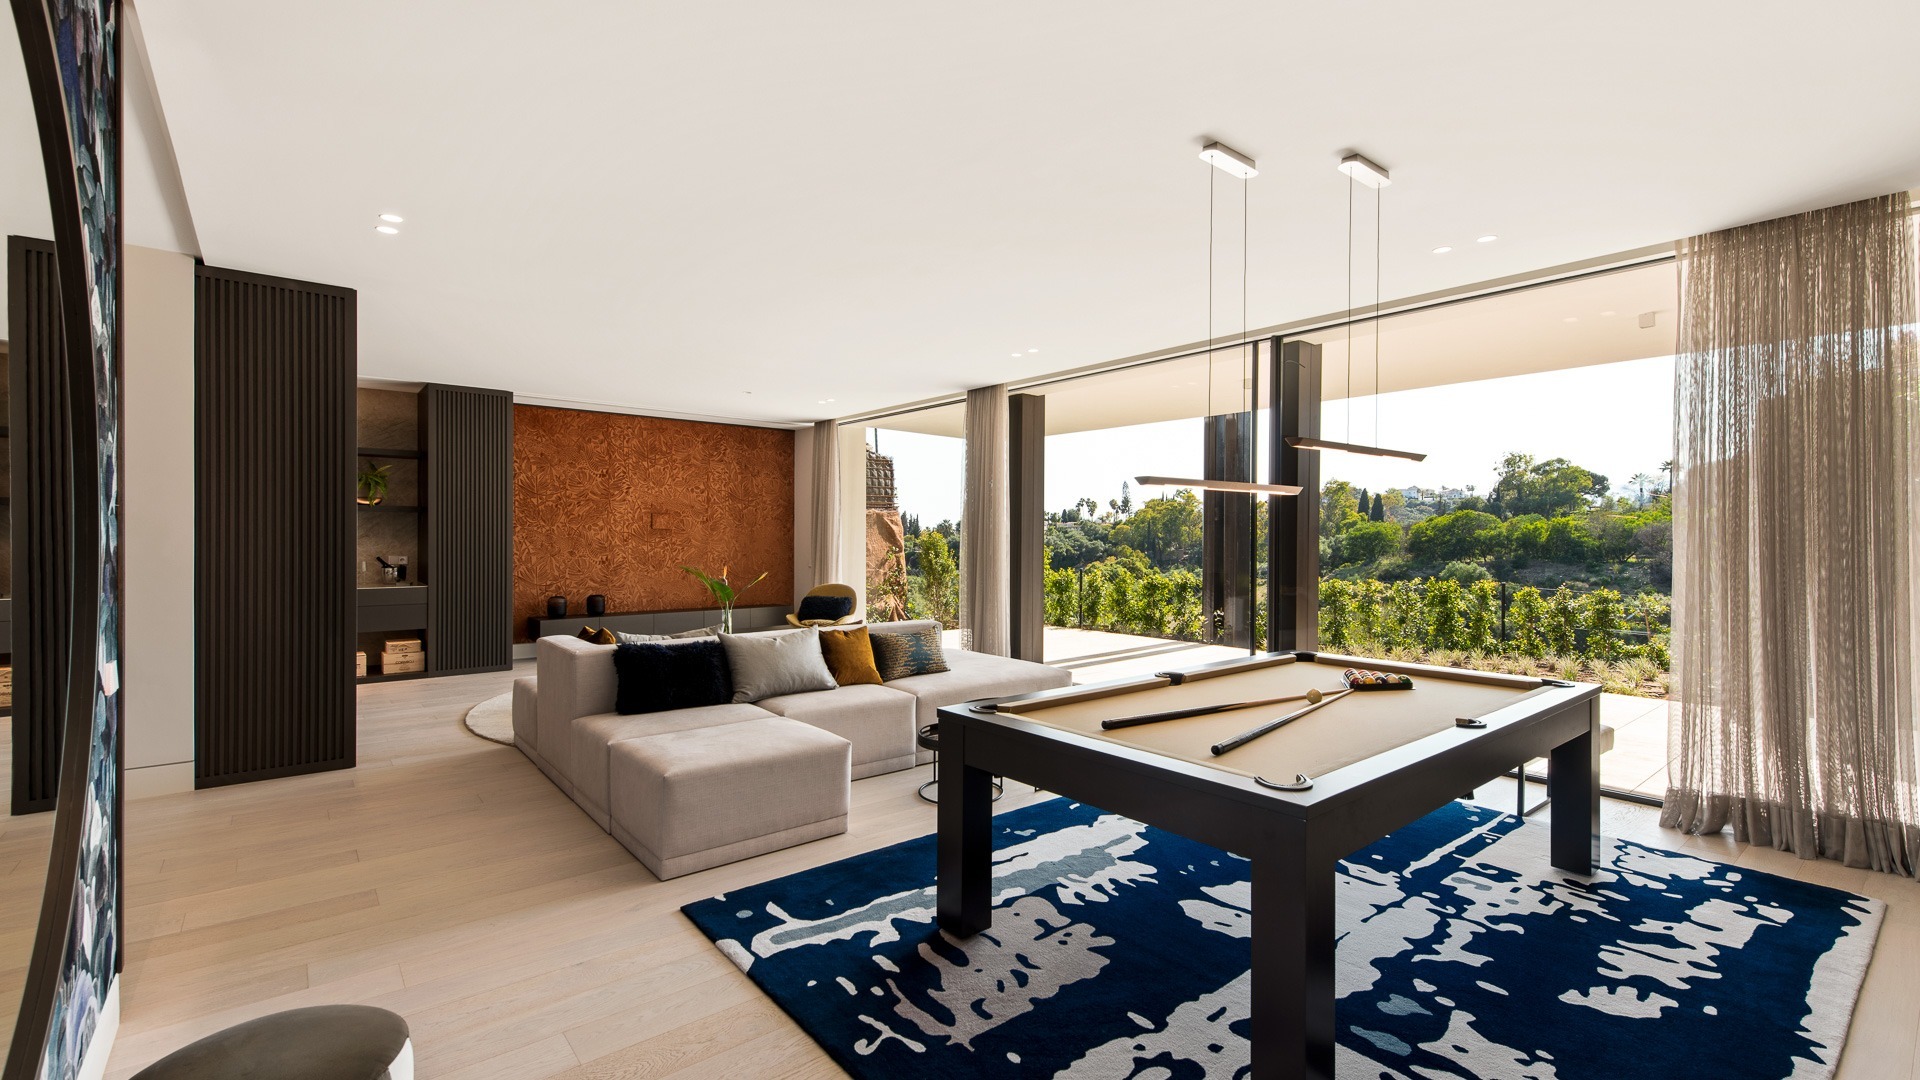 Exclusive top villa billar room - El Herrojo - Benahavis